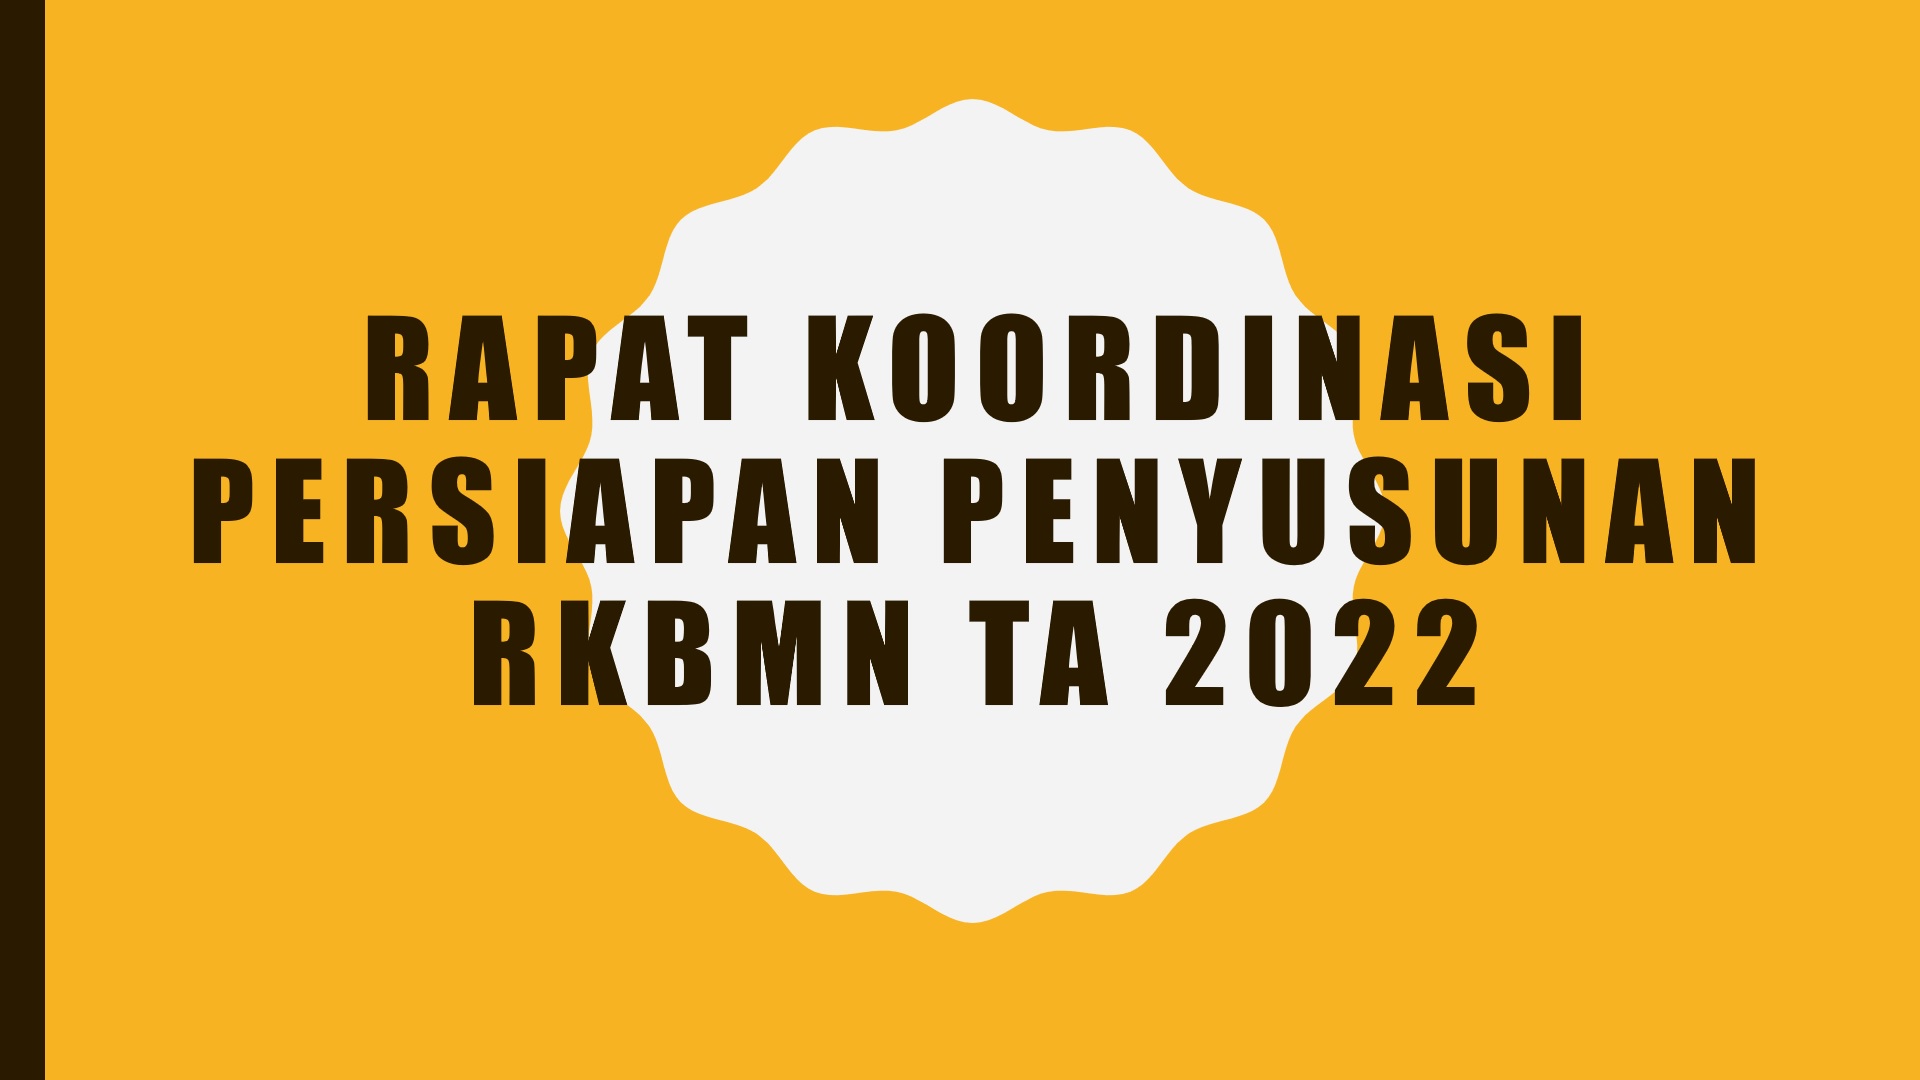 Rapat Koordinasi Persiapan Penyusunan RKBMN KPKNL Palangka Raya Tahun Anggaran 2022